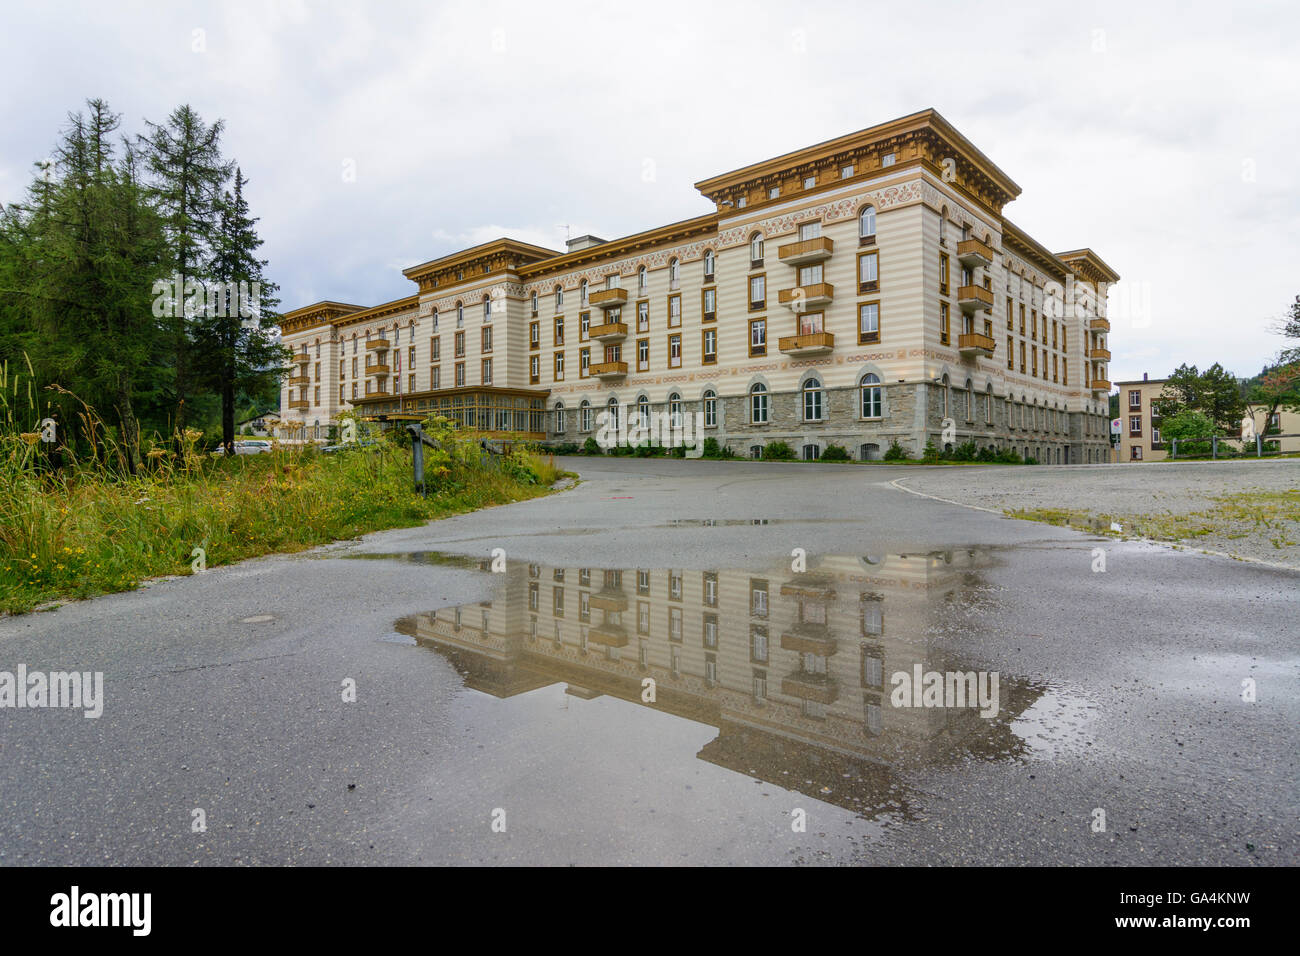 Hotel palace switzerland hi-res stock photography and images - Alamy